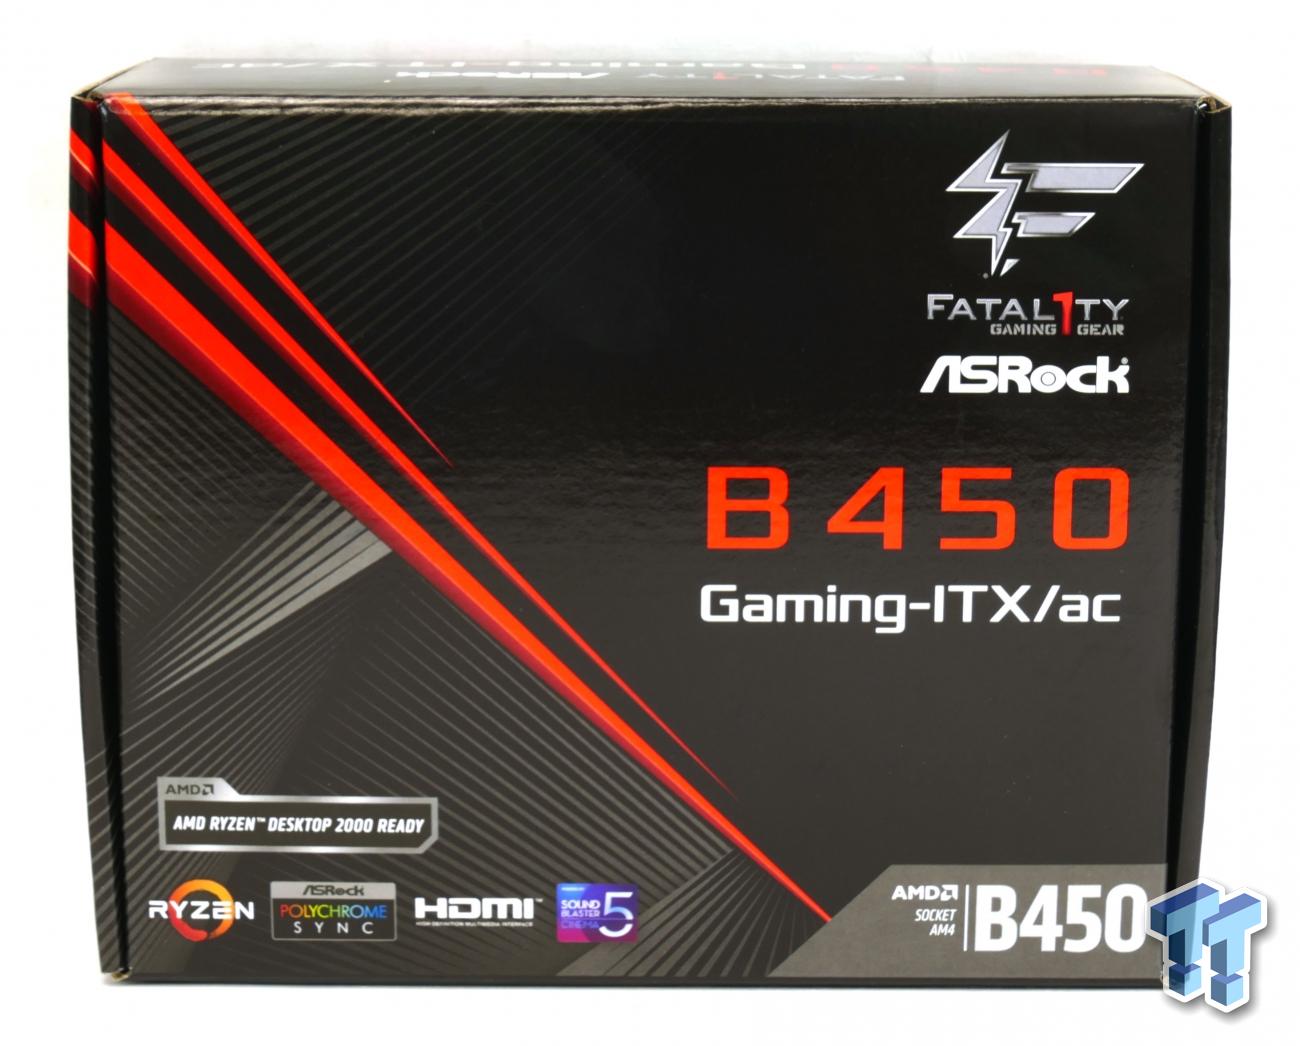 ASRock Fatal1ty B450 Gaming-ITX/ac (B450) Motherboard Review